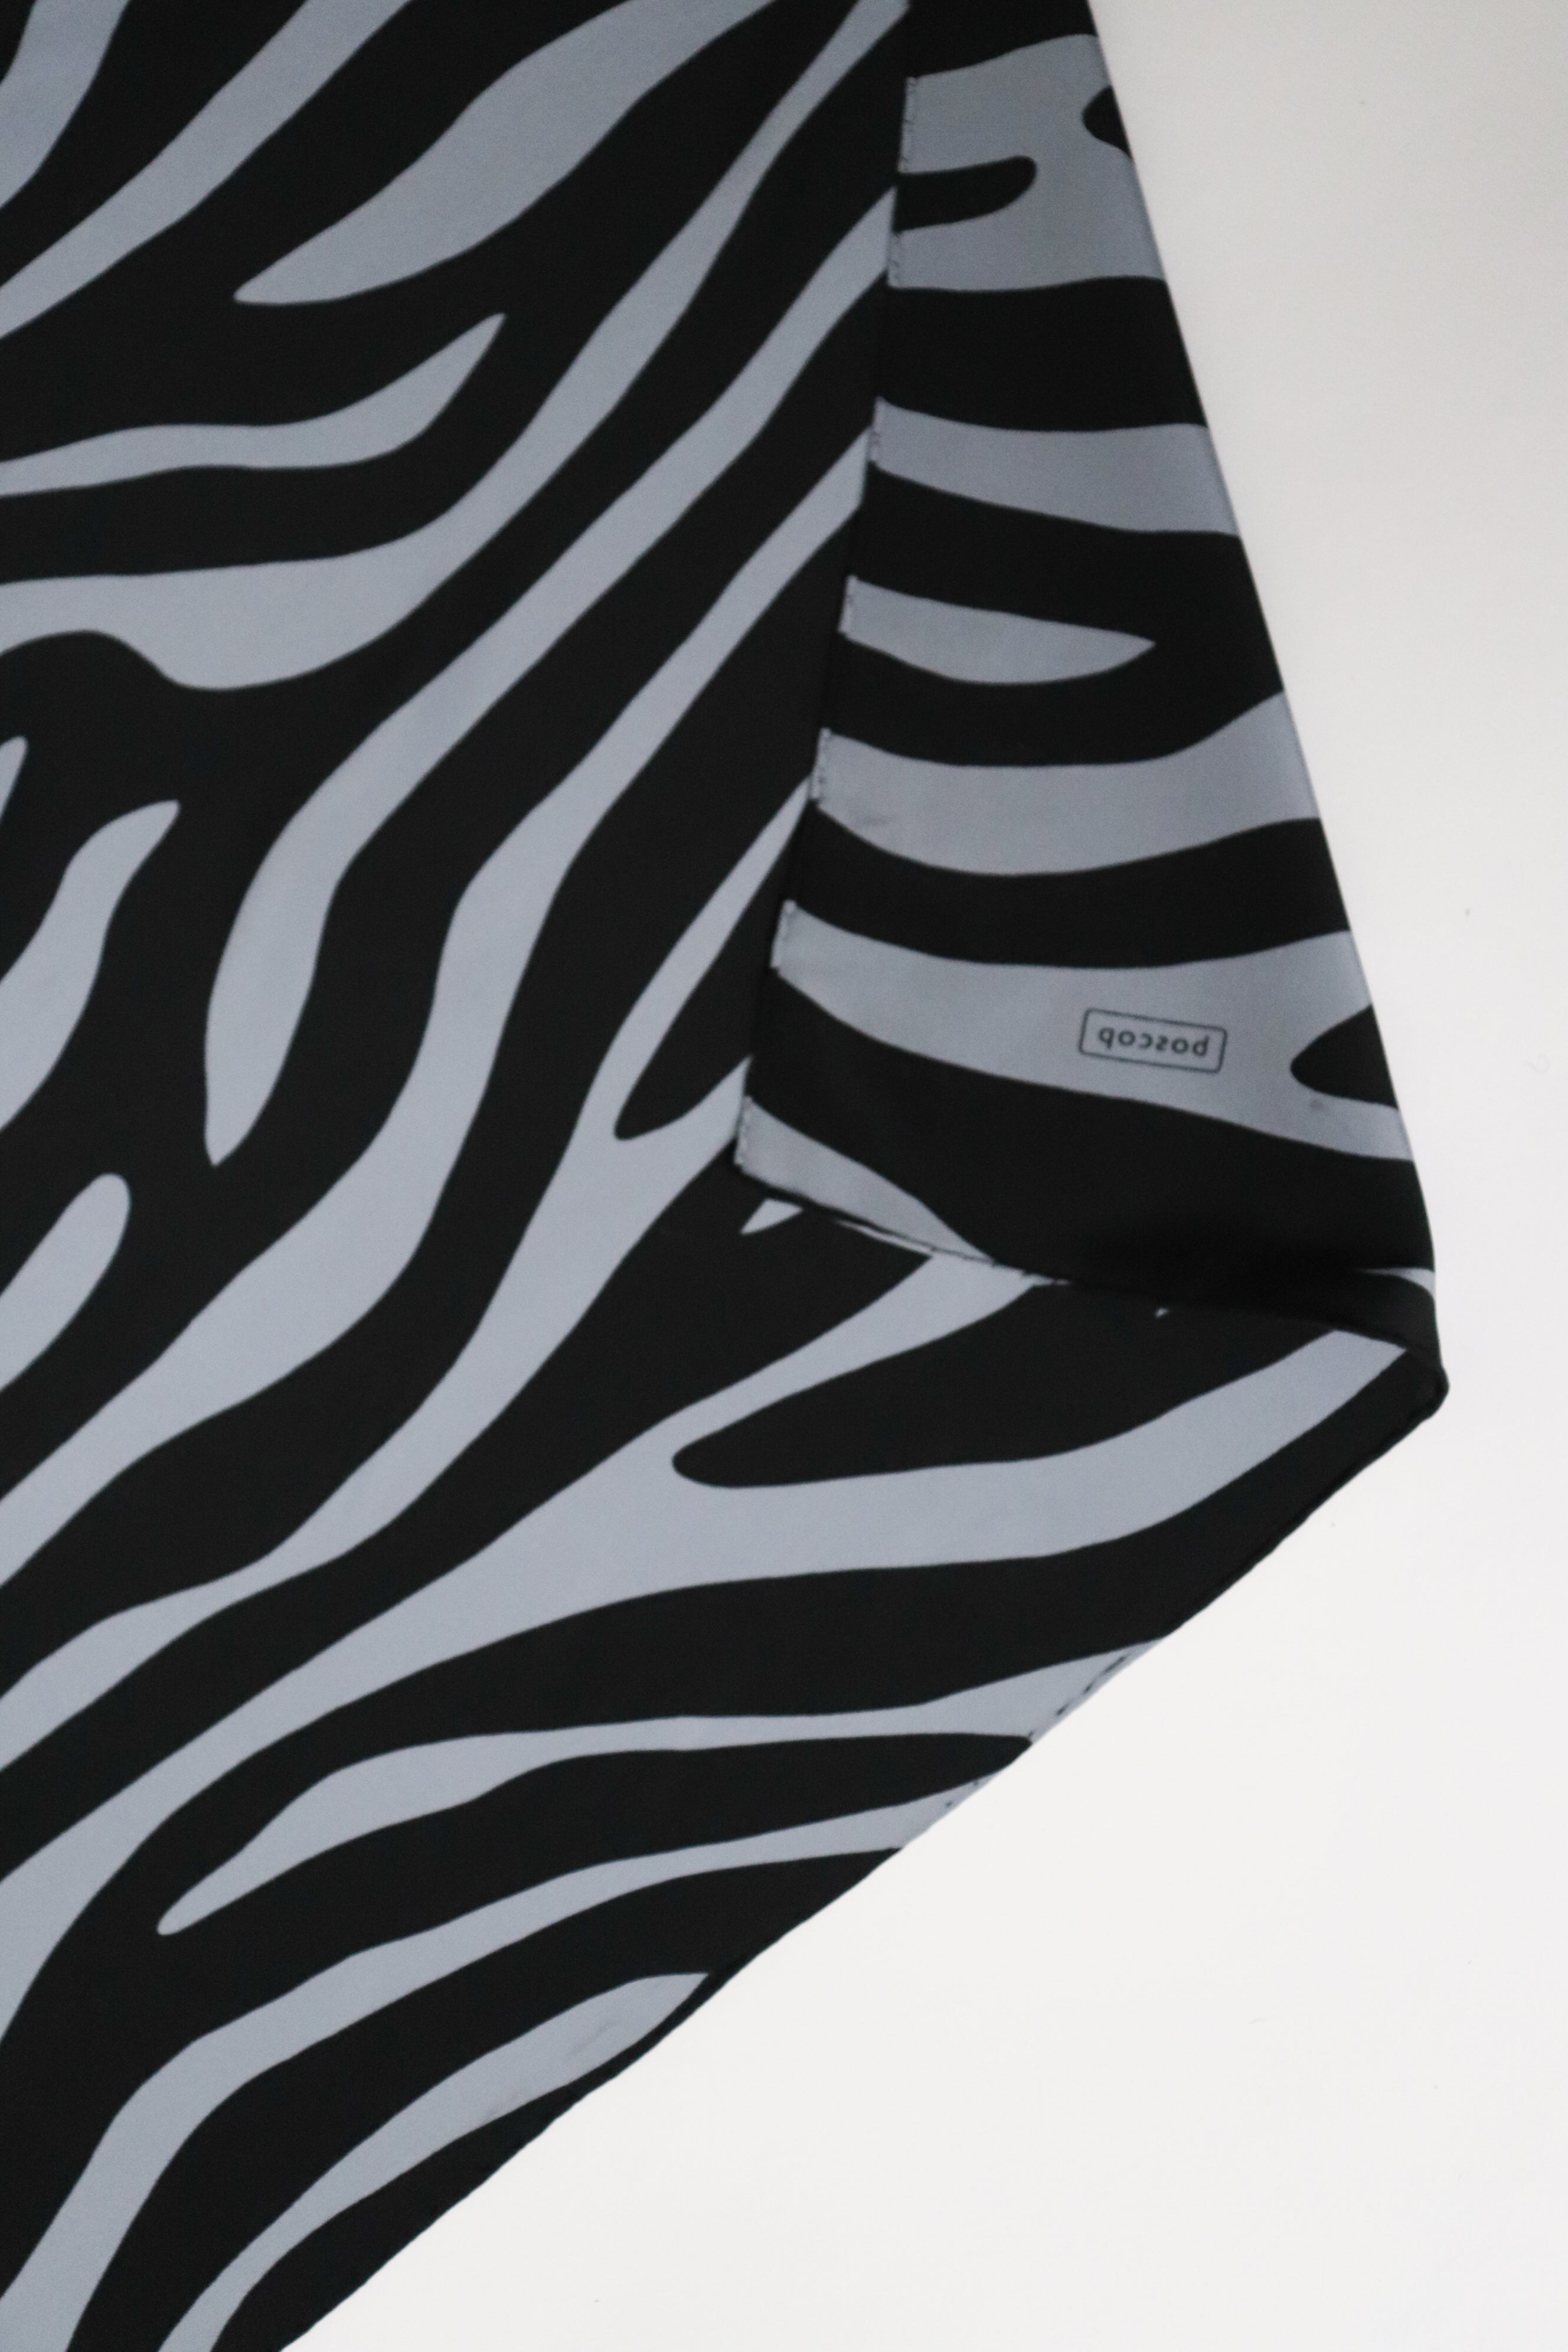 Boscop Zebra Print Vintage Silk Scarf - Grey / Black  -  Rectangle / LARGE